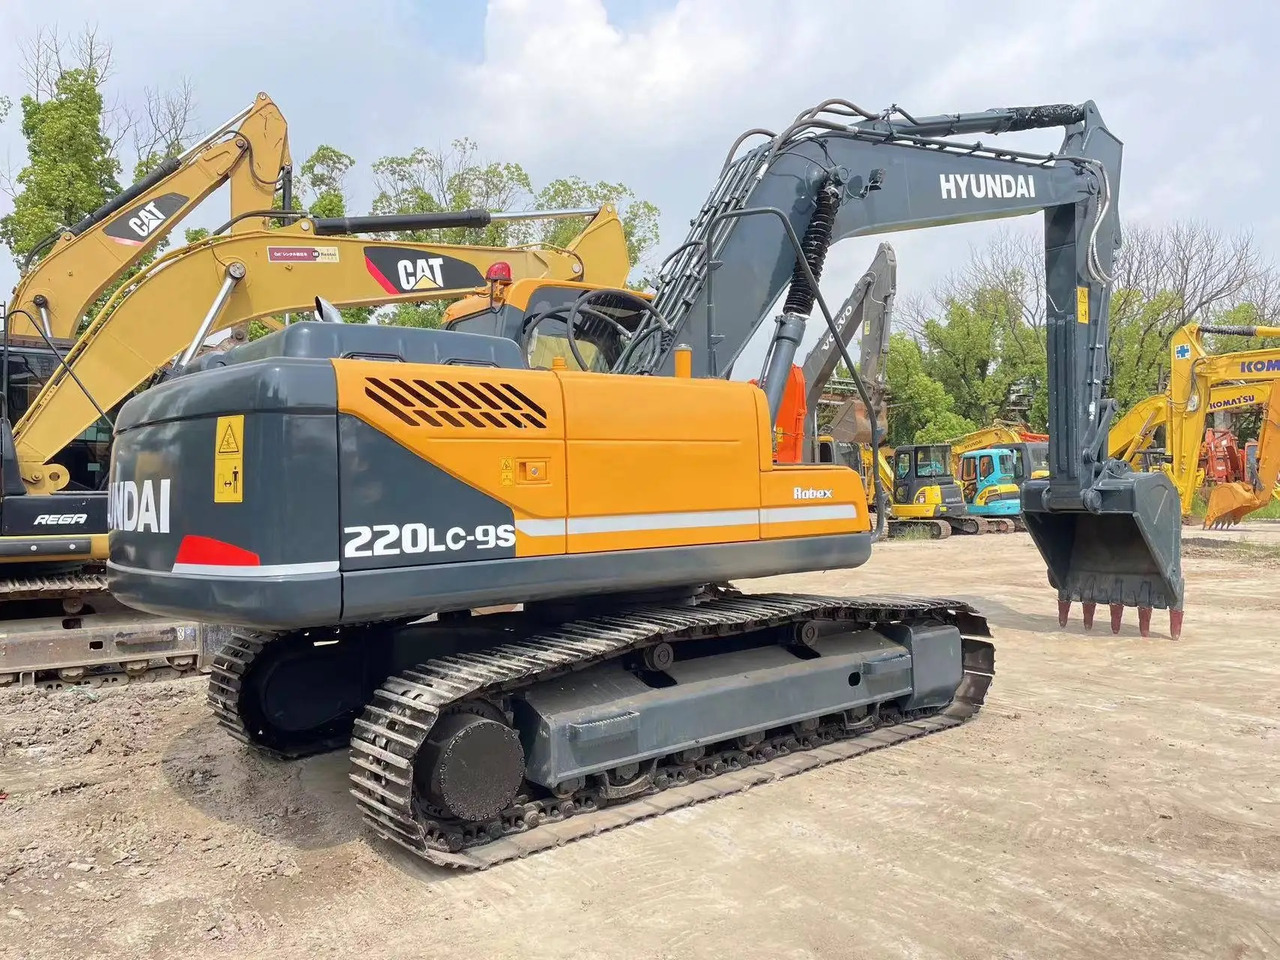 Rupsgraafmachine HYUNDAI R220 -9S track excavator 22 tons Korean hydraulic digger: afbeelding 3